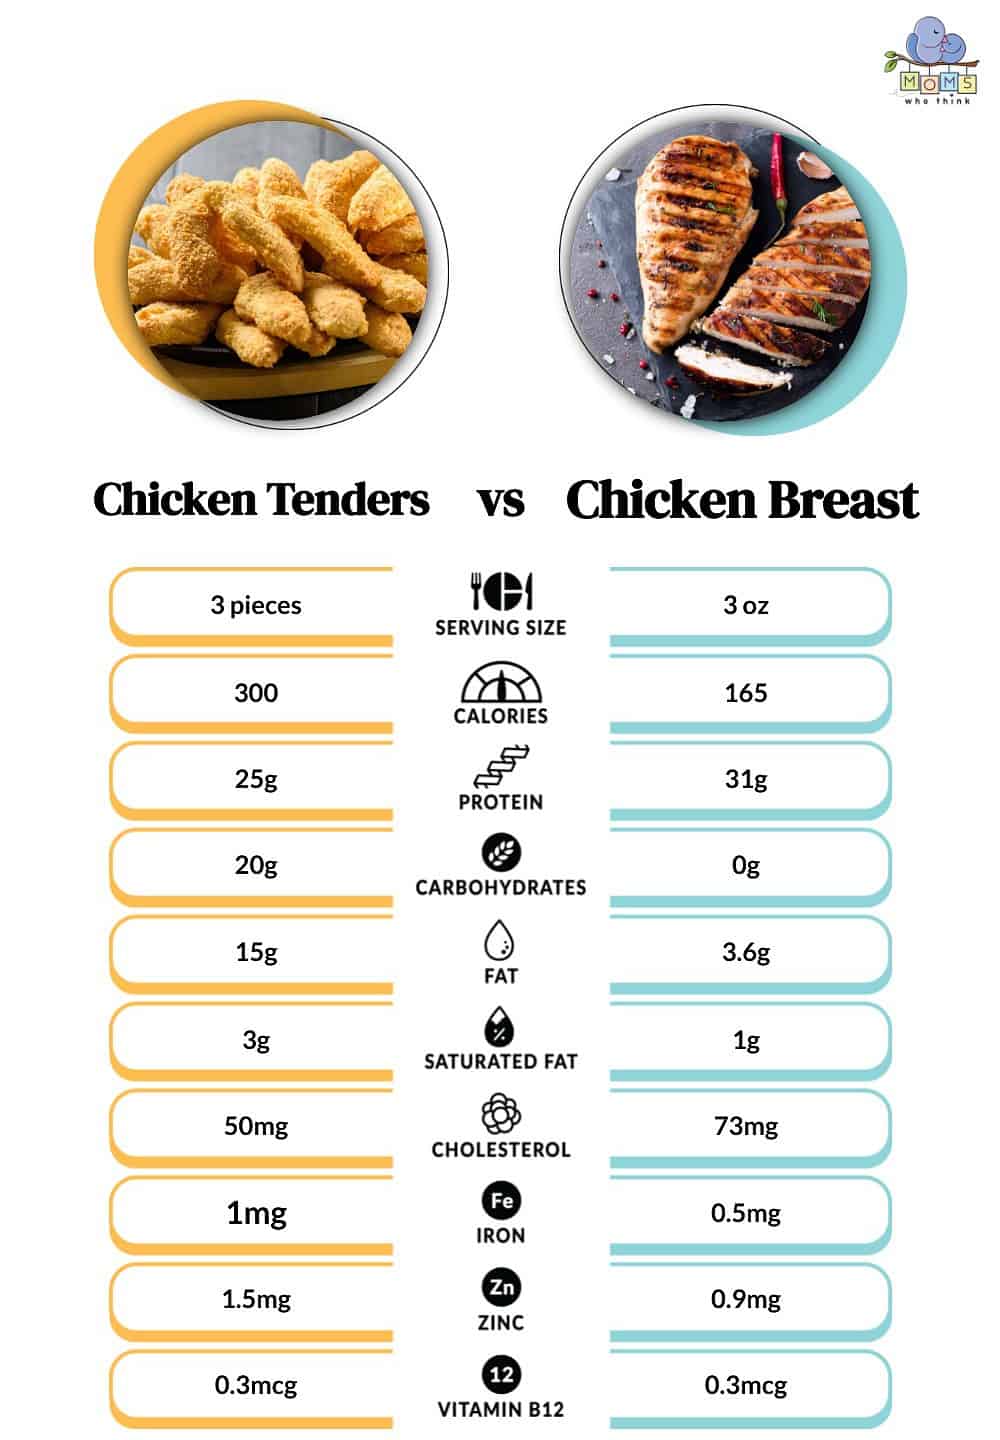 Chicken Tenders vs Chicken Breast nutritional information chart